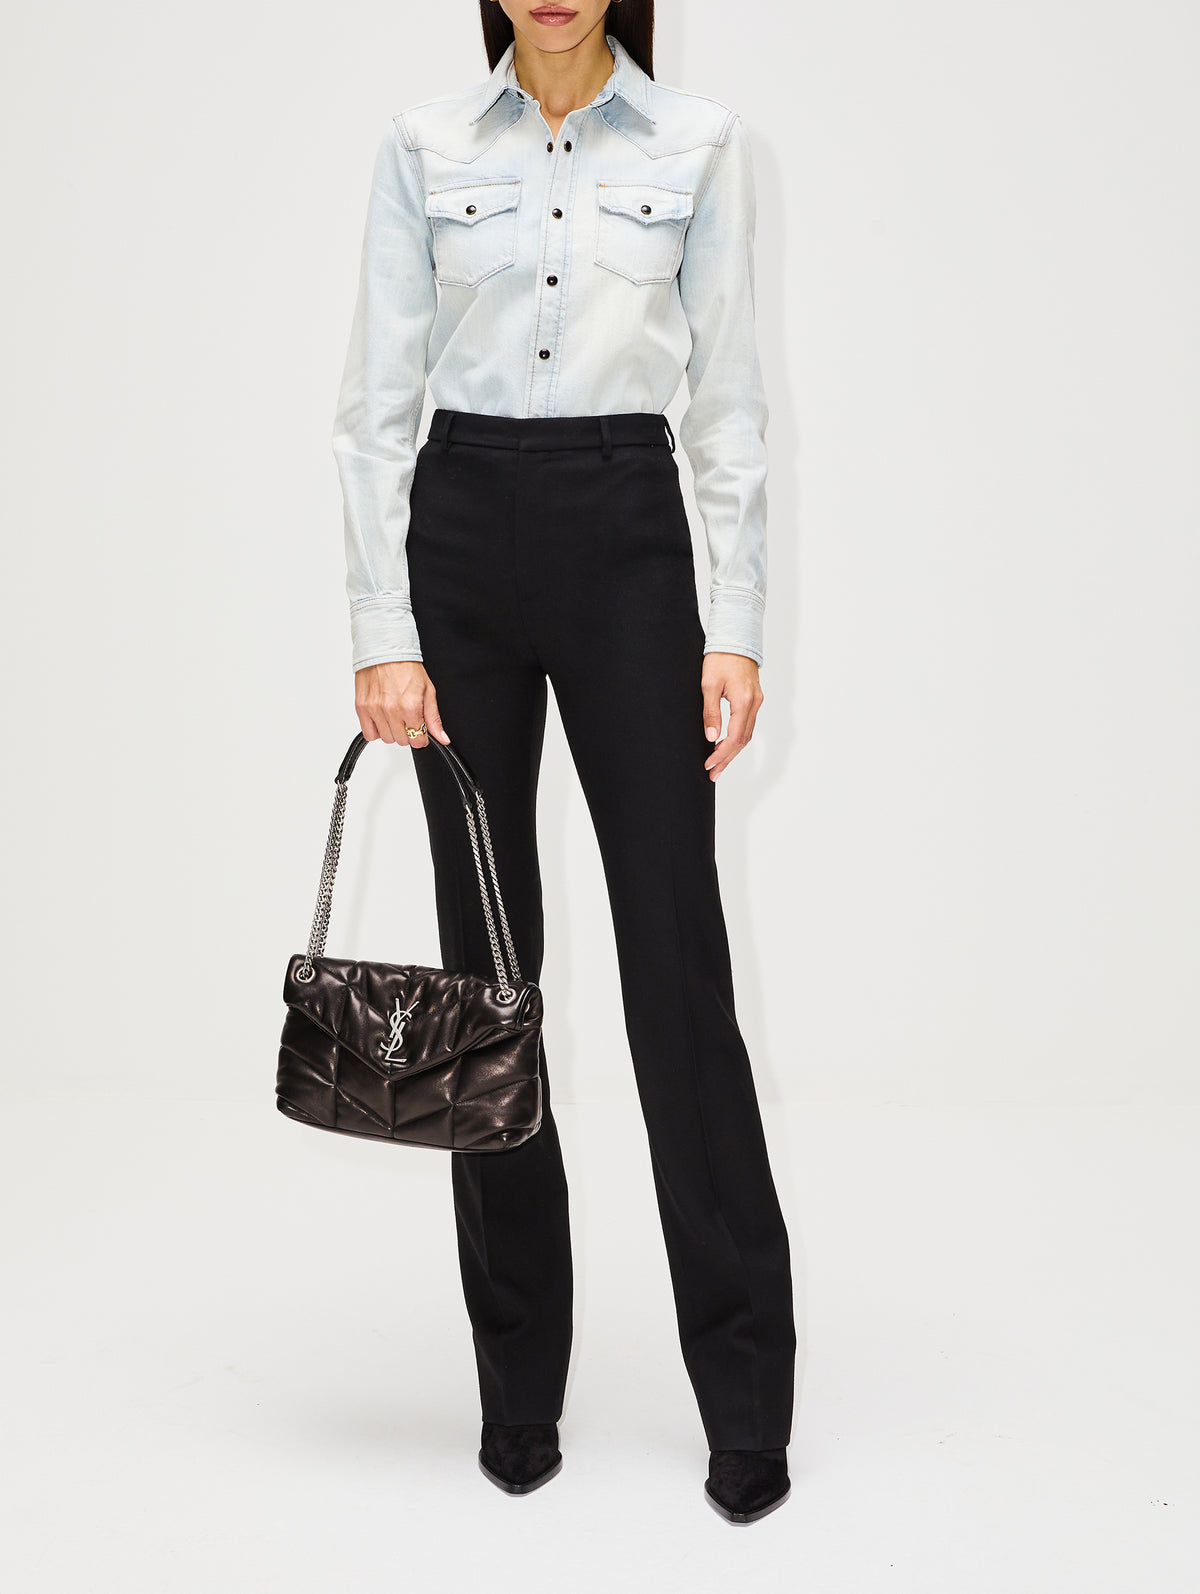 Yves Saint Laurent Envelope Medium Chain Leather Chain Bag